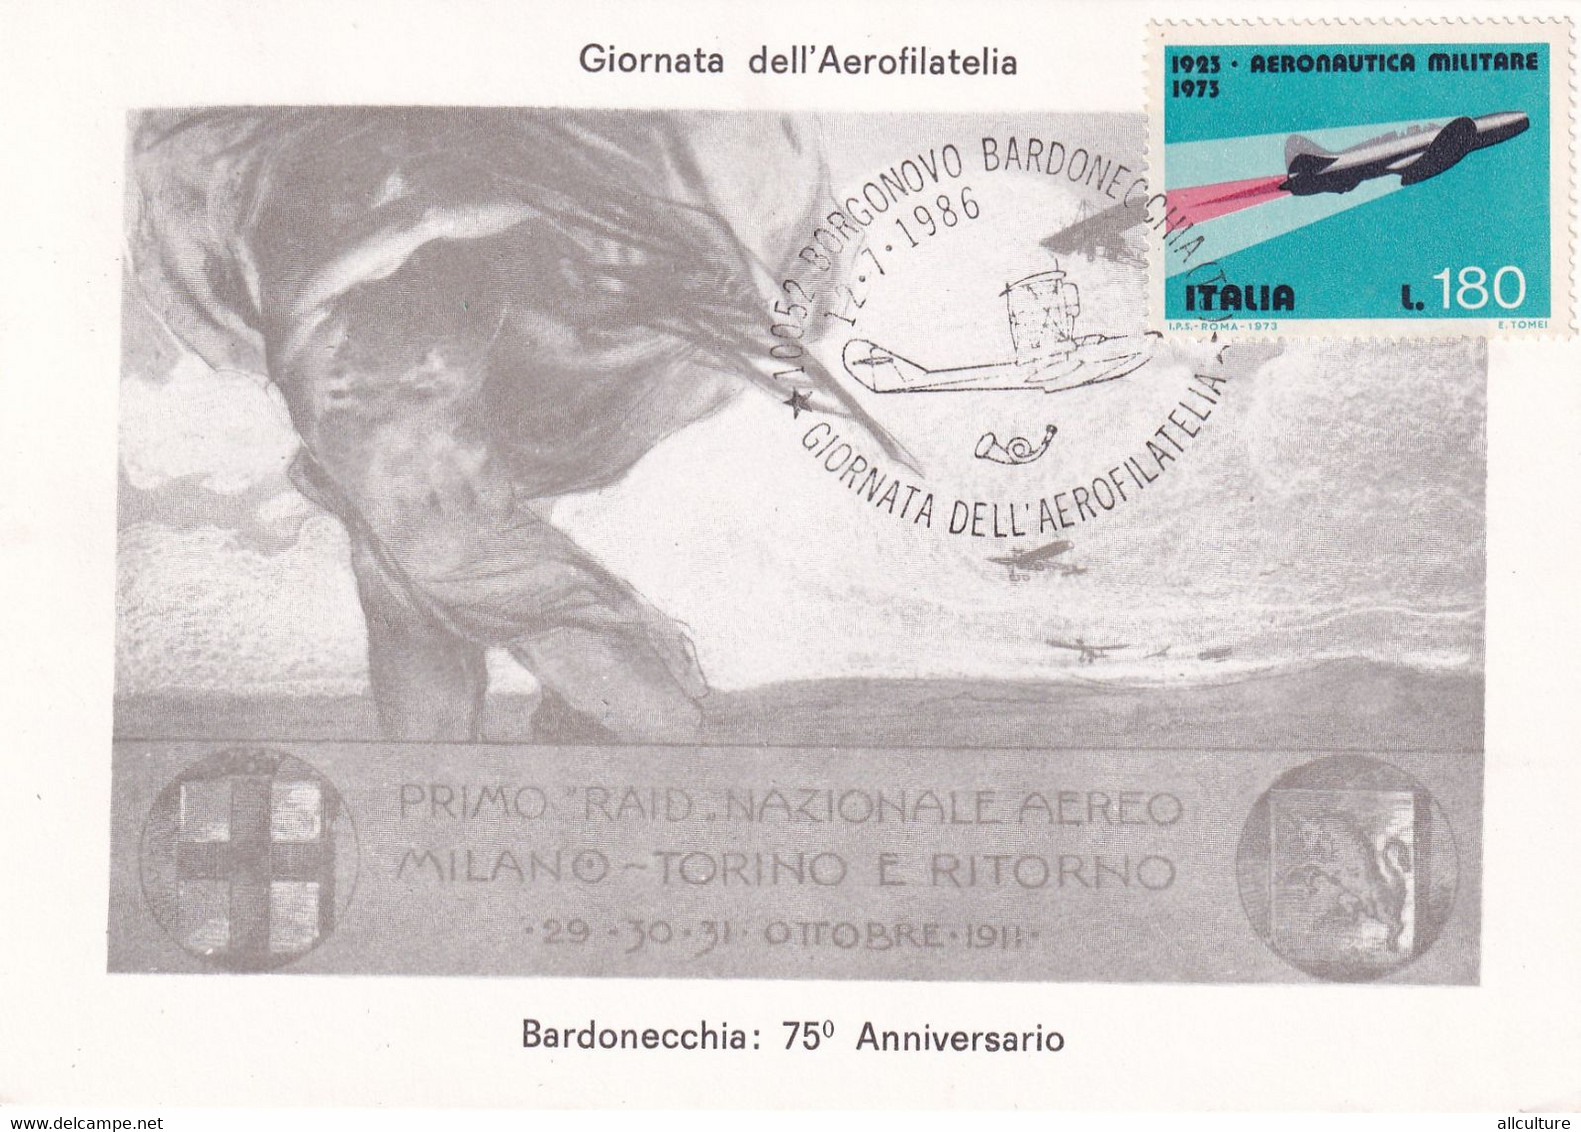 A10860-GIORNATA DELL'AEROFILATELIA,FIRST NATIONAL AIR RAID MILANO TORINO,AERONAUTICA MILITARE ITALIA 1986 USED STAMP - Aviones